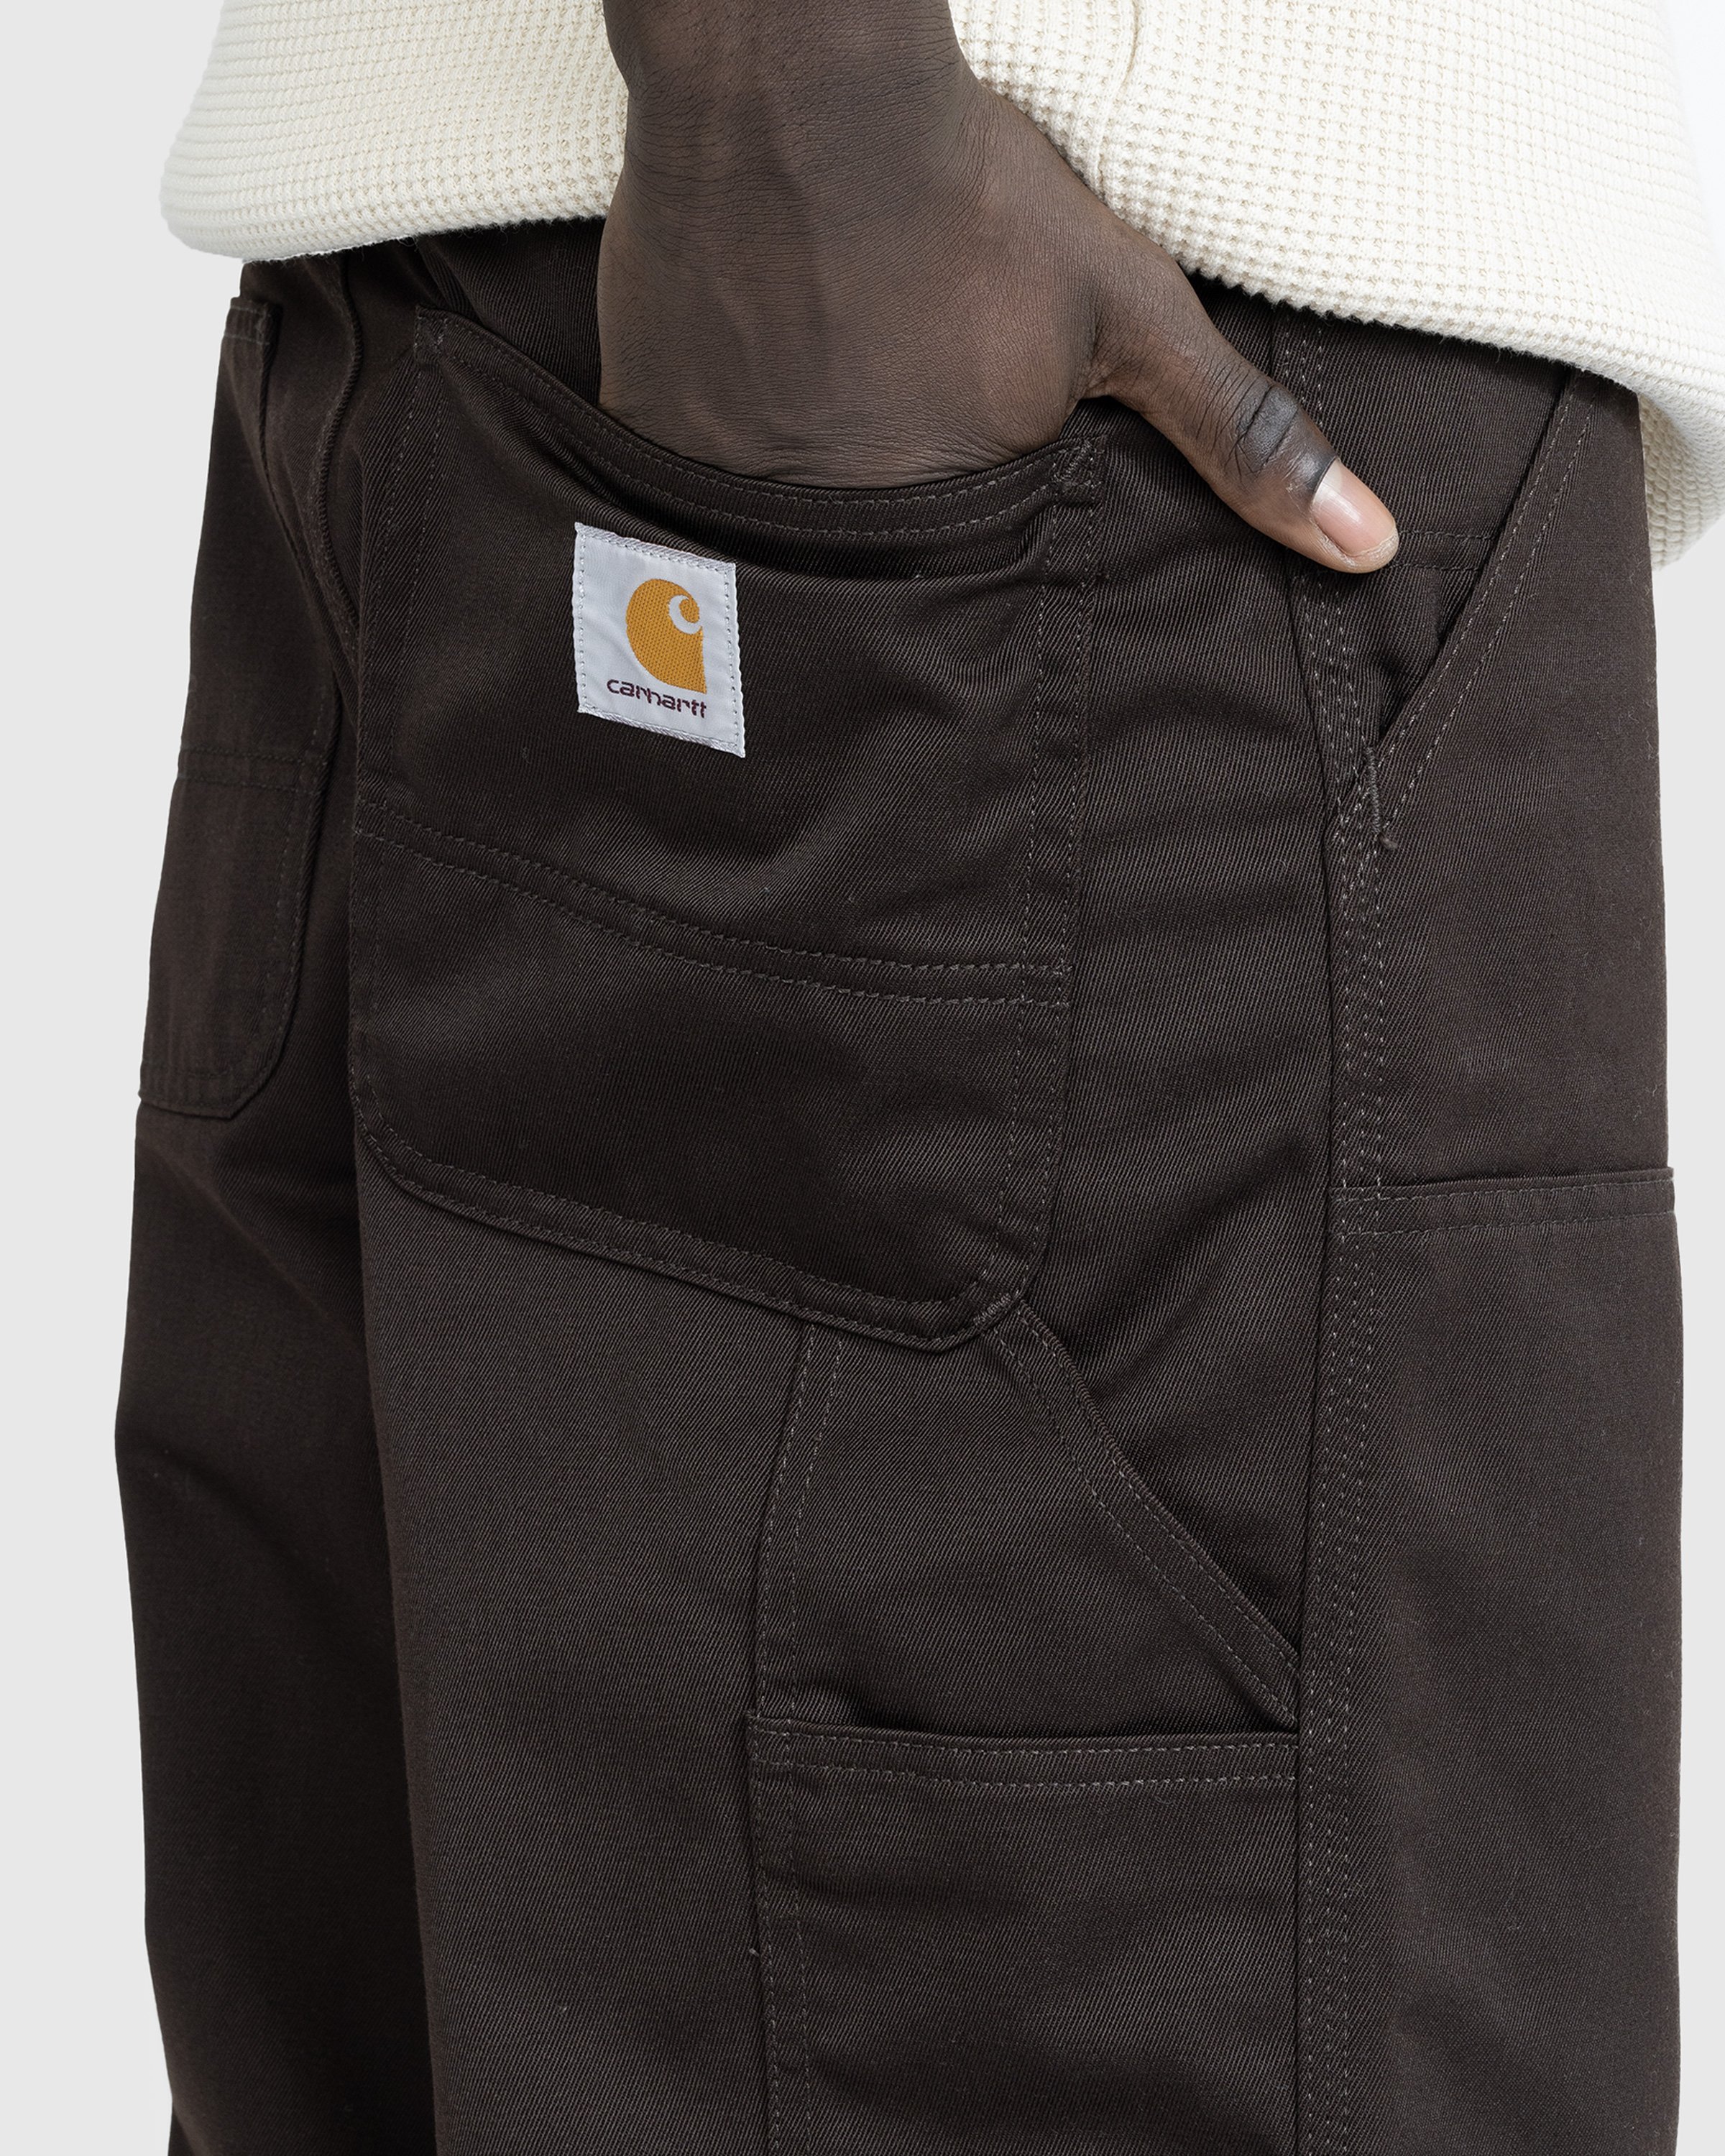 Carhartt WIP - Double Knee Pant Tobacco/Rinsed - Clothing - Brown - Image 6